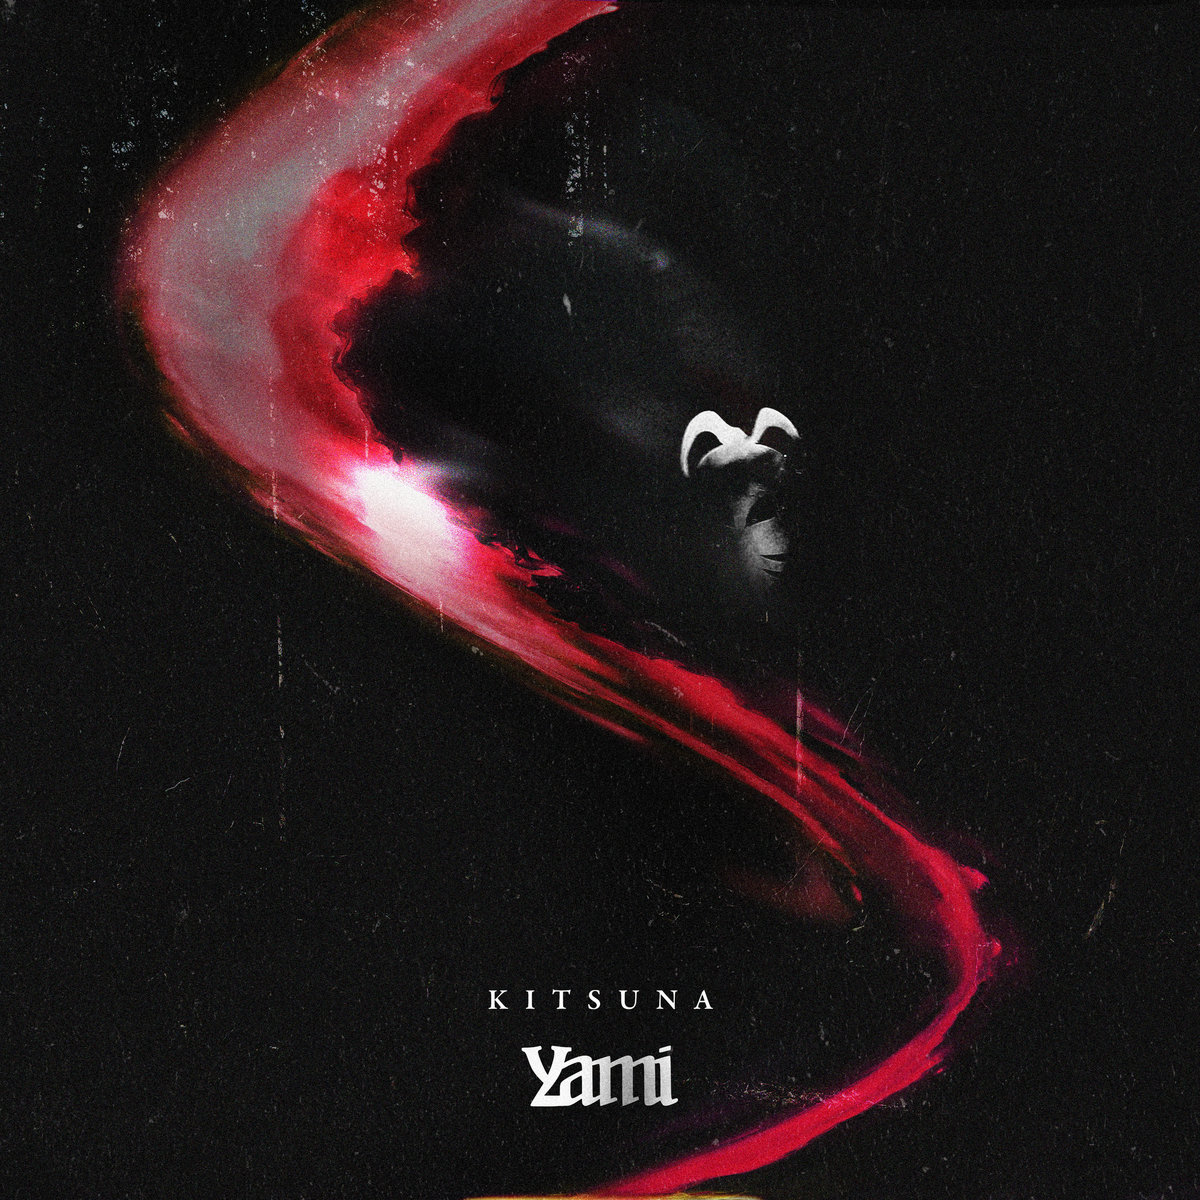 B'zサポートキーボディスト・サム・ポマンティの音楽プロジェクト「Kitsuna」の2nd アルバム『Yami』